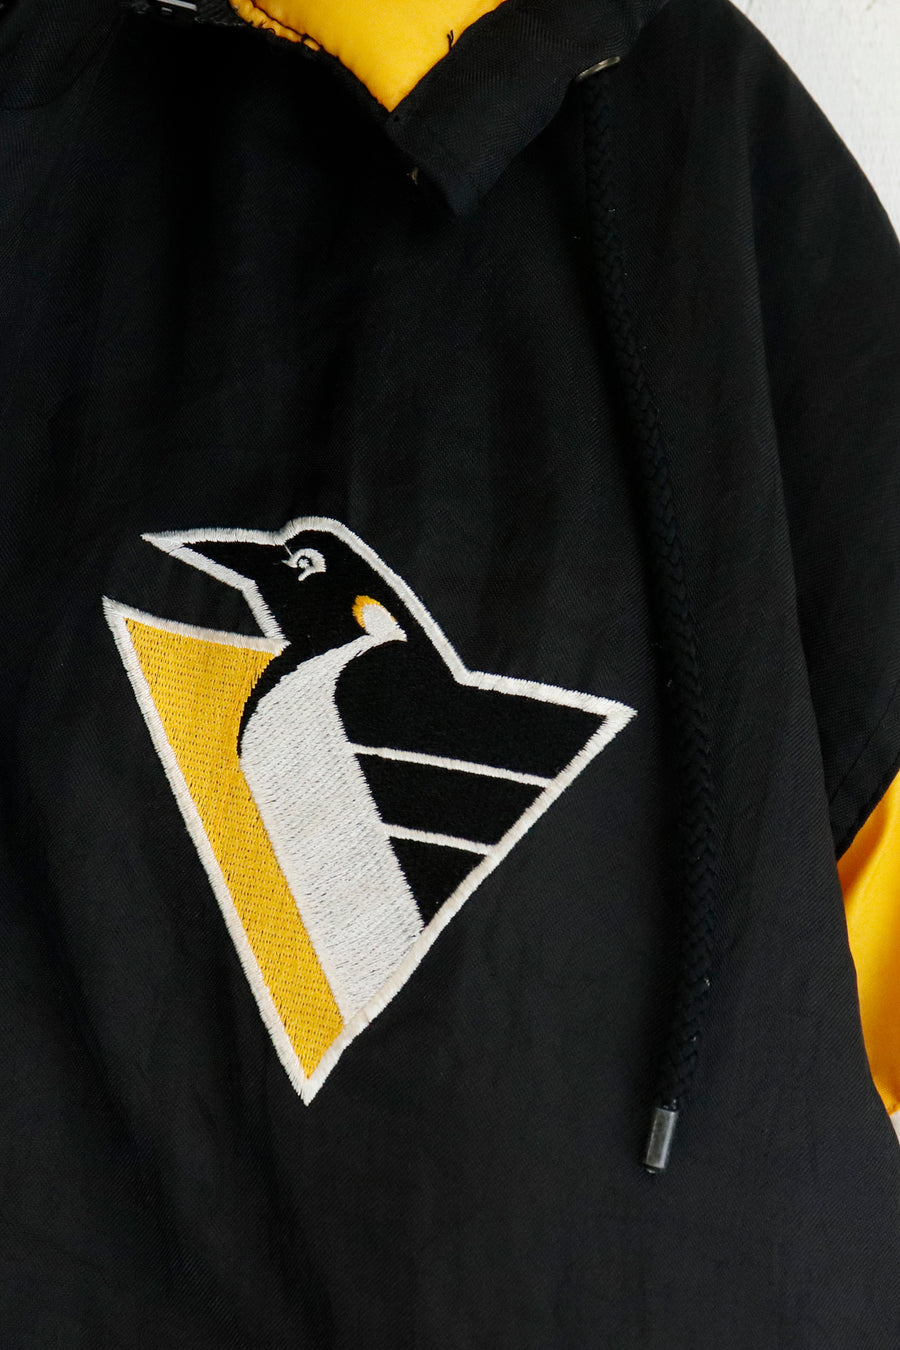 Vintage NHL Pittsburgh Penguins Zip Up Jacket Sz L